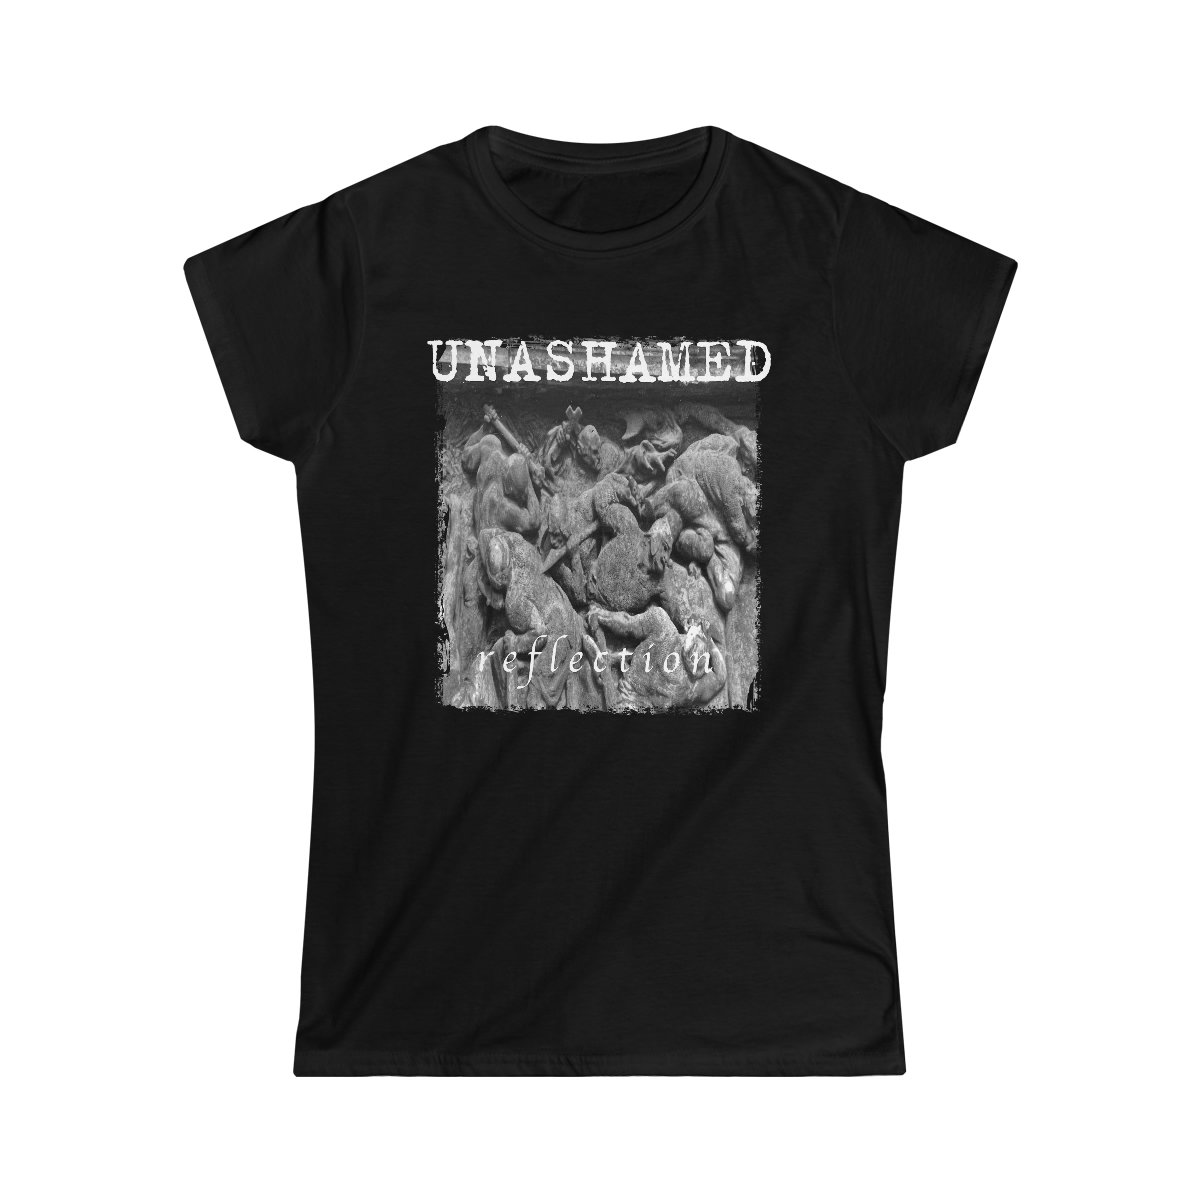 Unashamed – Reflection Women’s Short Sleeve Tshirt 64000LD